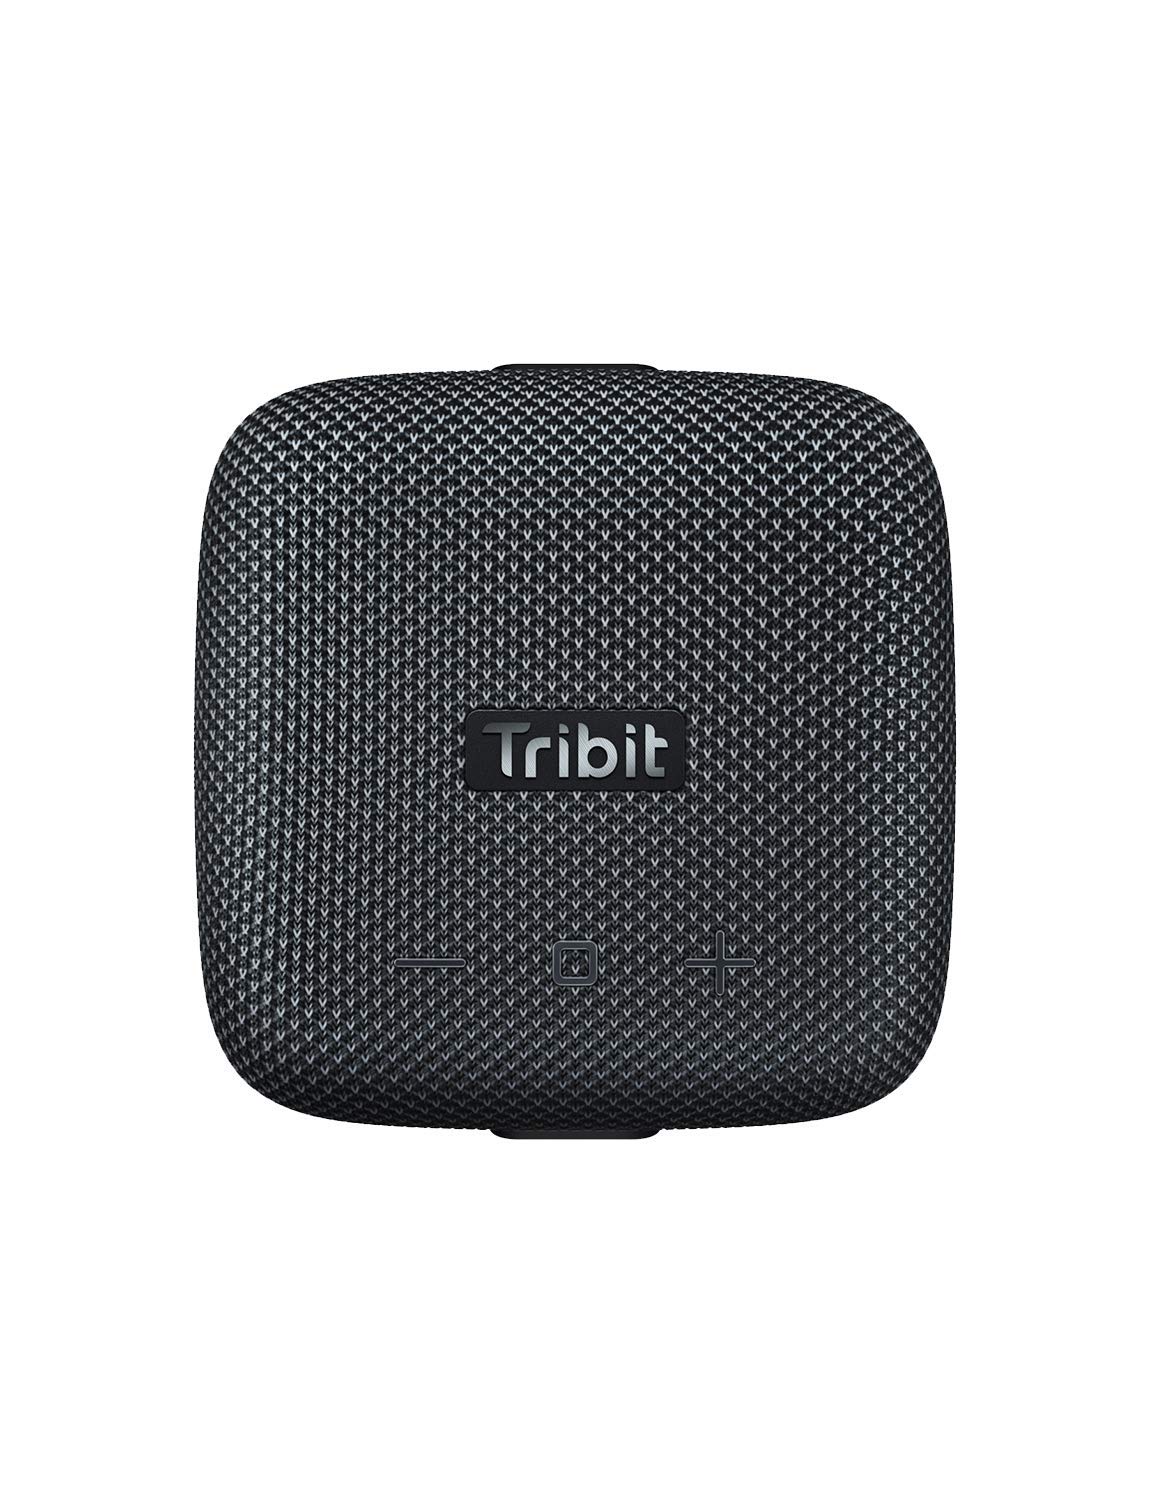 Tribit 便携式扬声器、StormBox 微型蓝牙扬声器、IP67 防水防尘户外扬声器、声音响亮的自行车扬声器、高级 TI 放大器、内置 XBass、100 英尺蓝牙范围